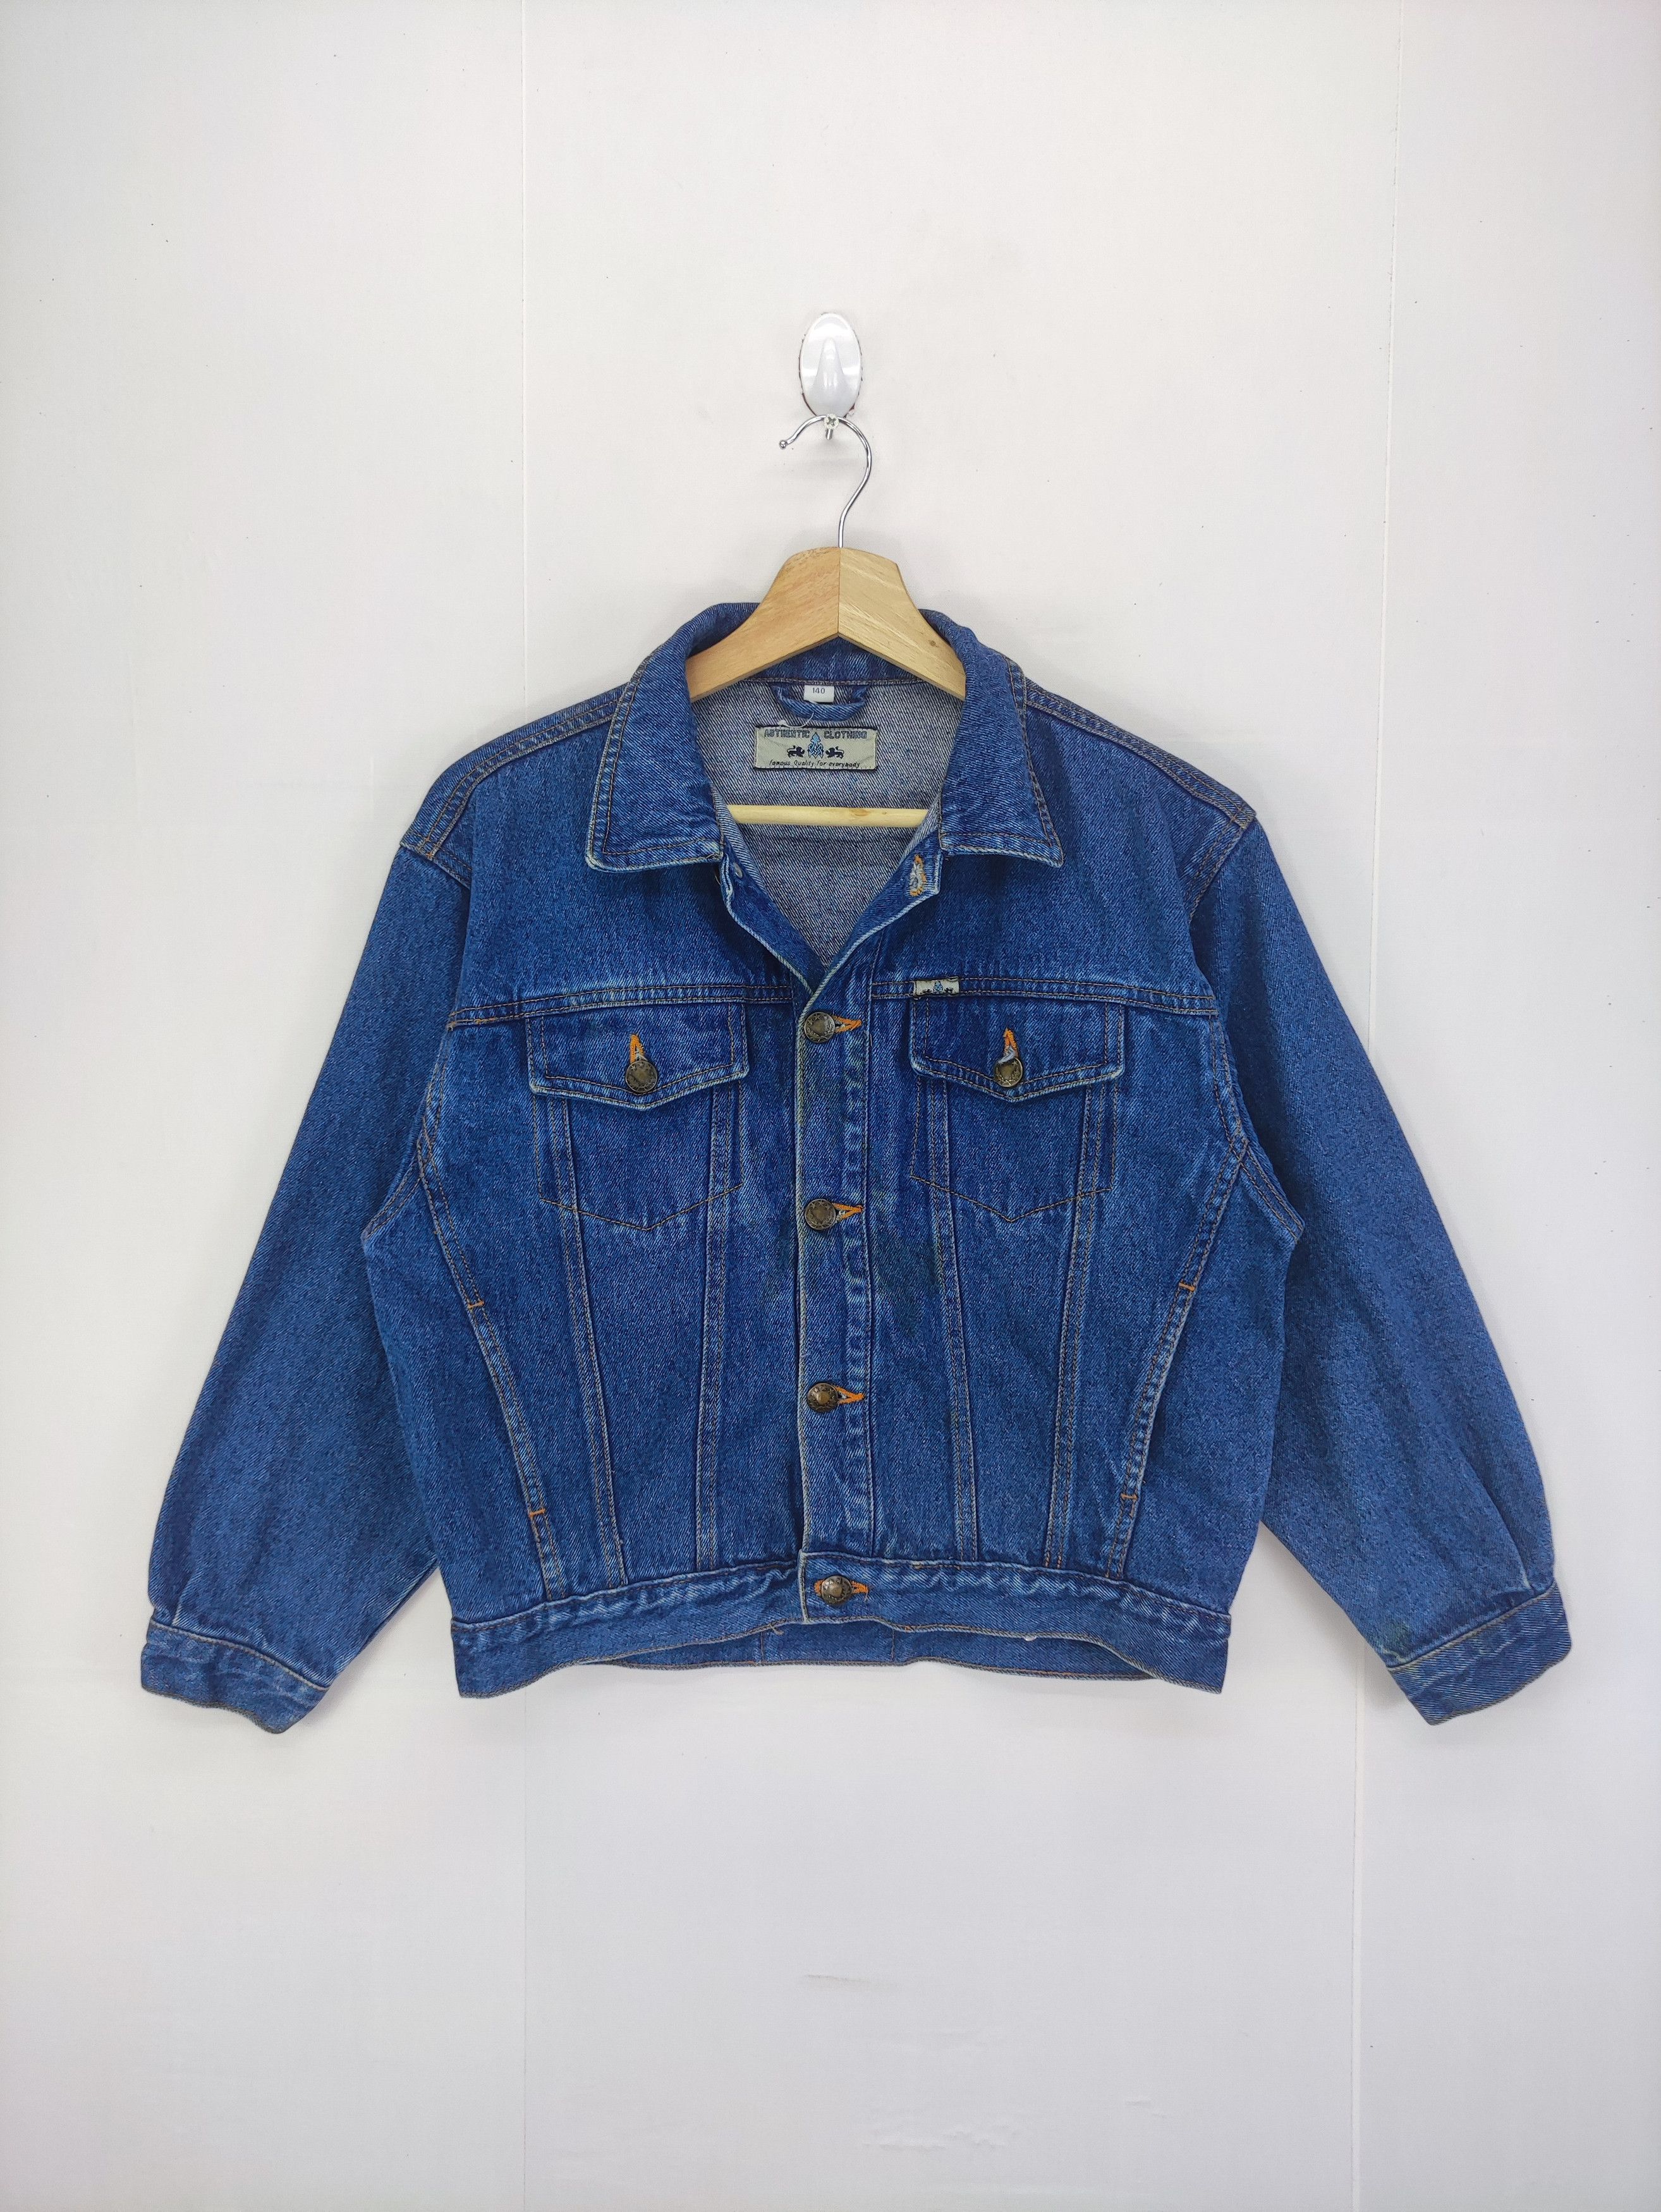 Japanese Brand Vintage Denim Jacket Unbrand | Grailed